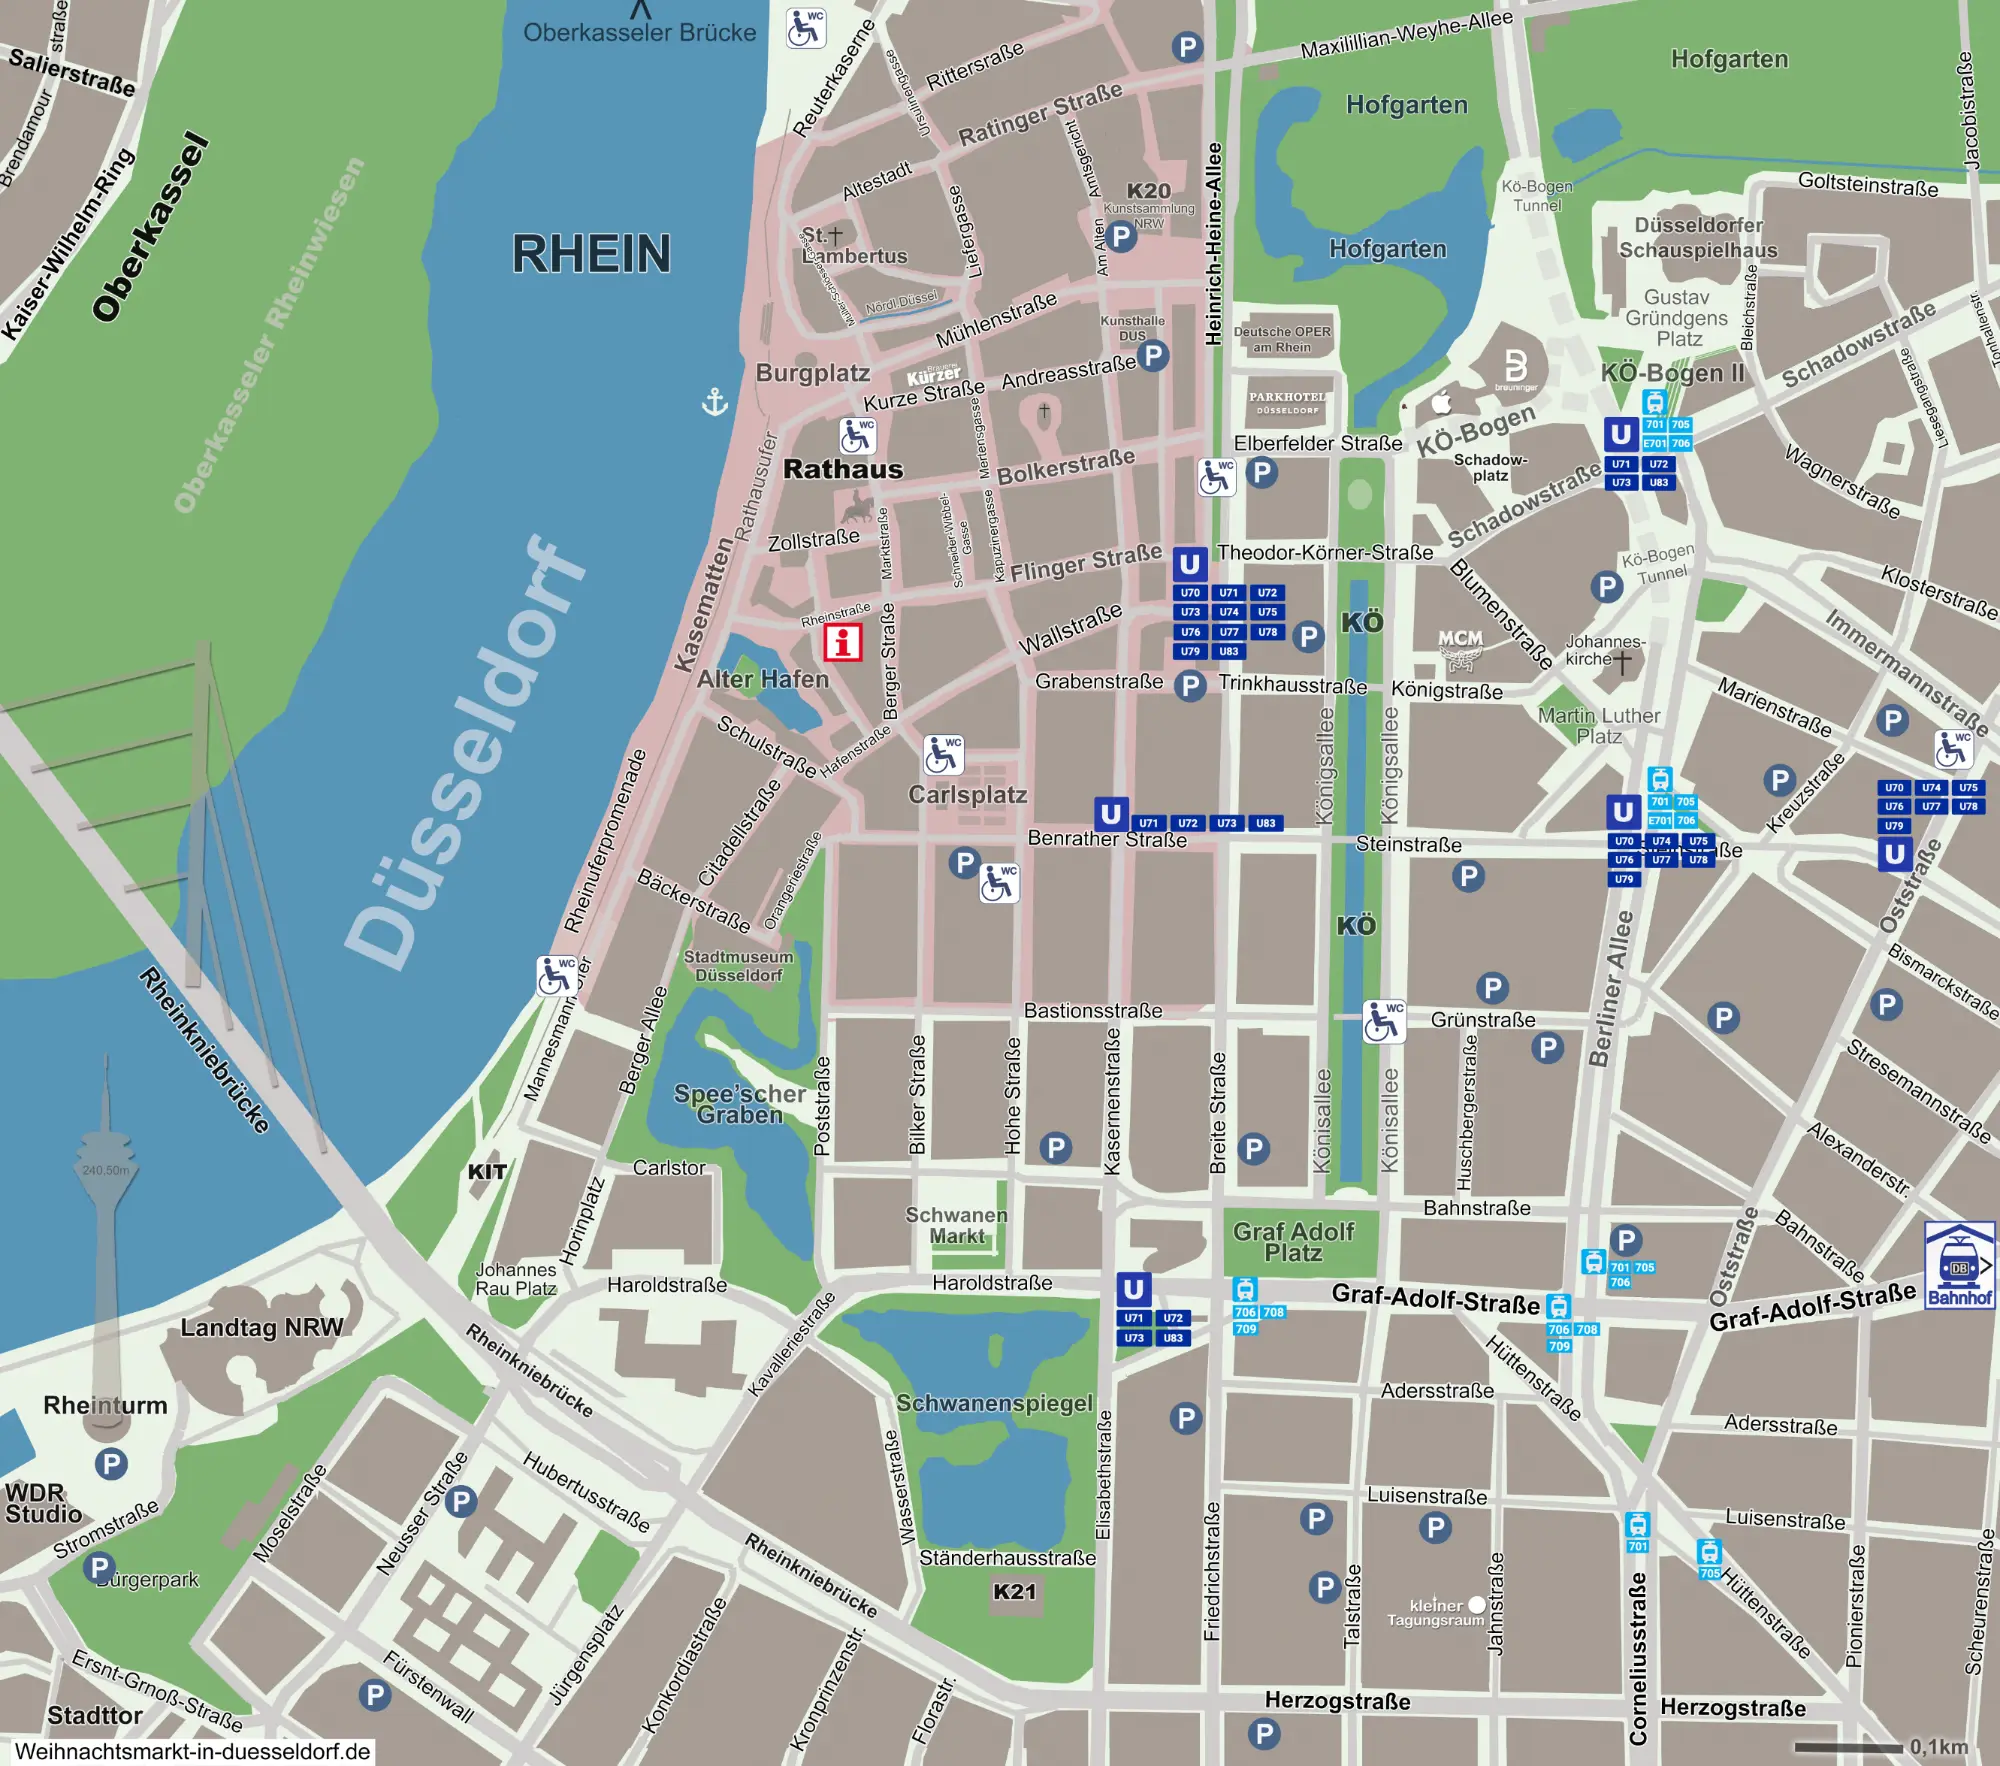 Stadtplan vom Düsseldorfer Zentrum